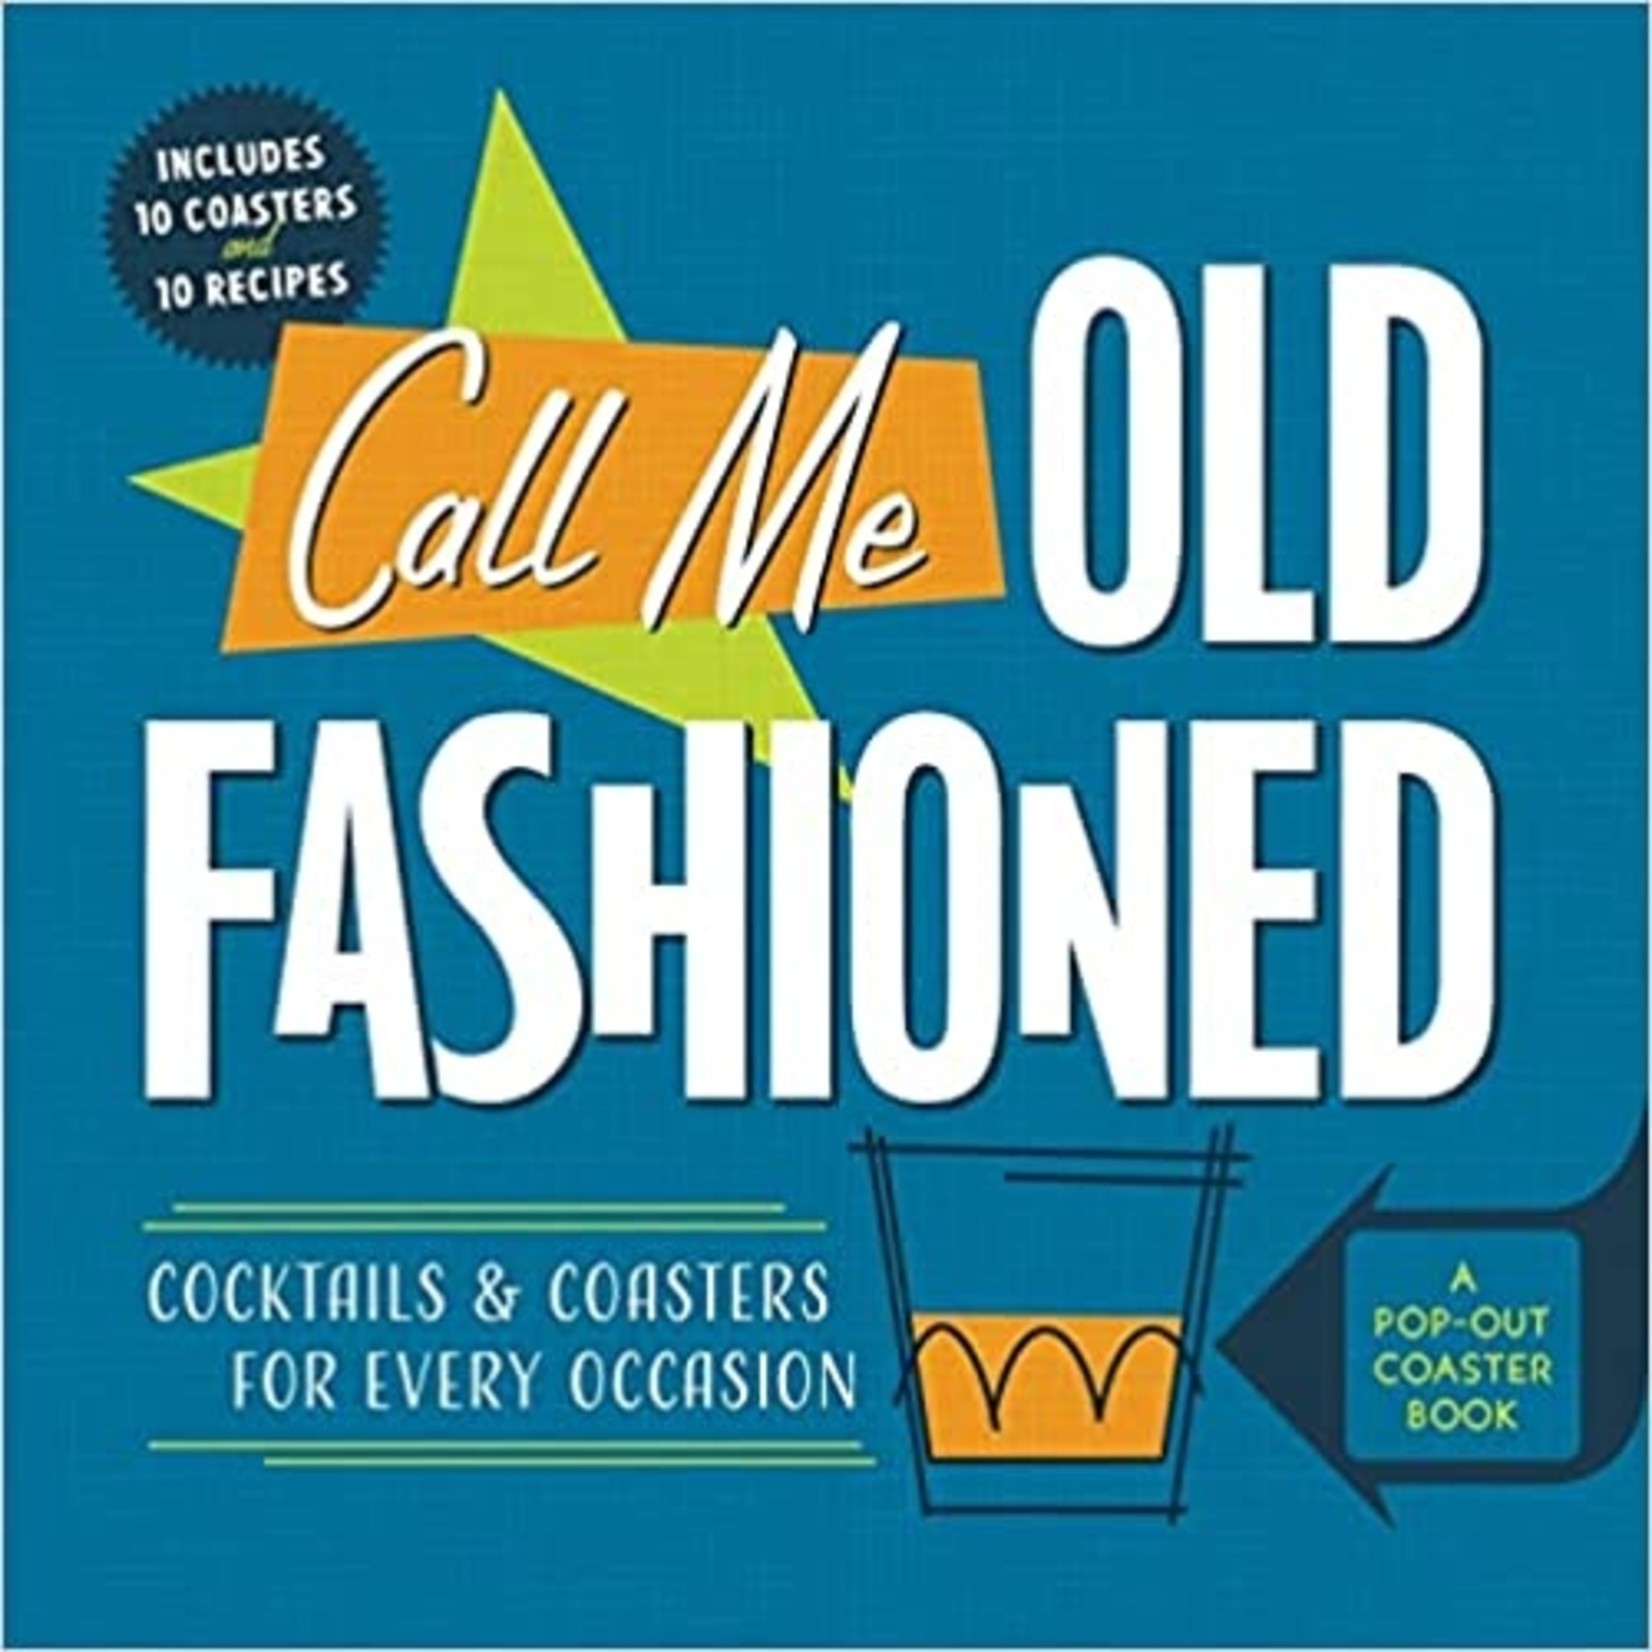 Call Me Old Fashioned Coaster Book